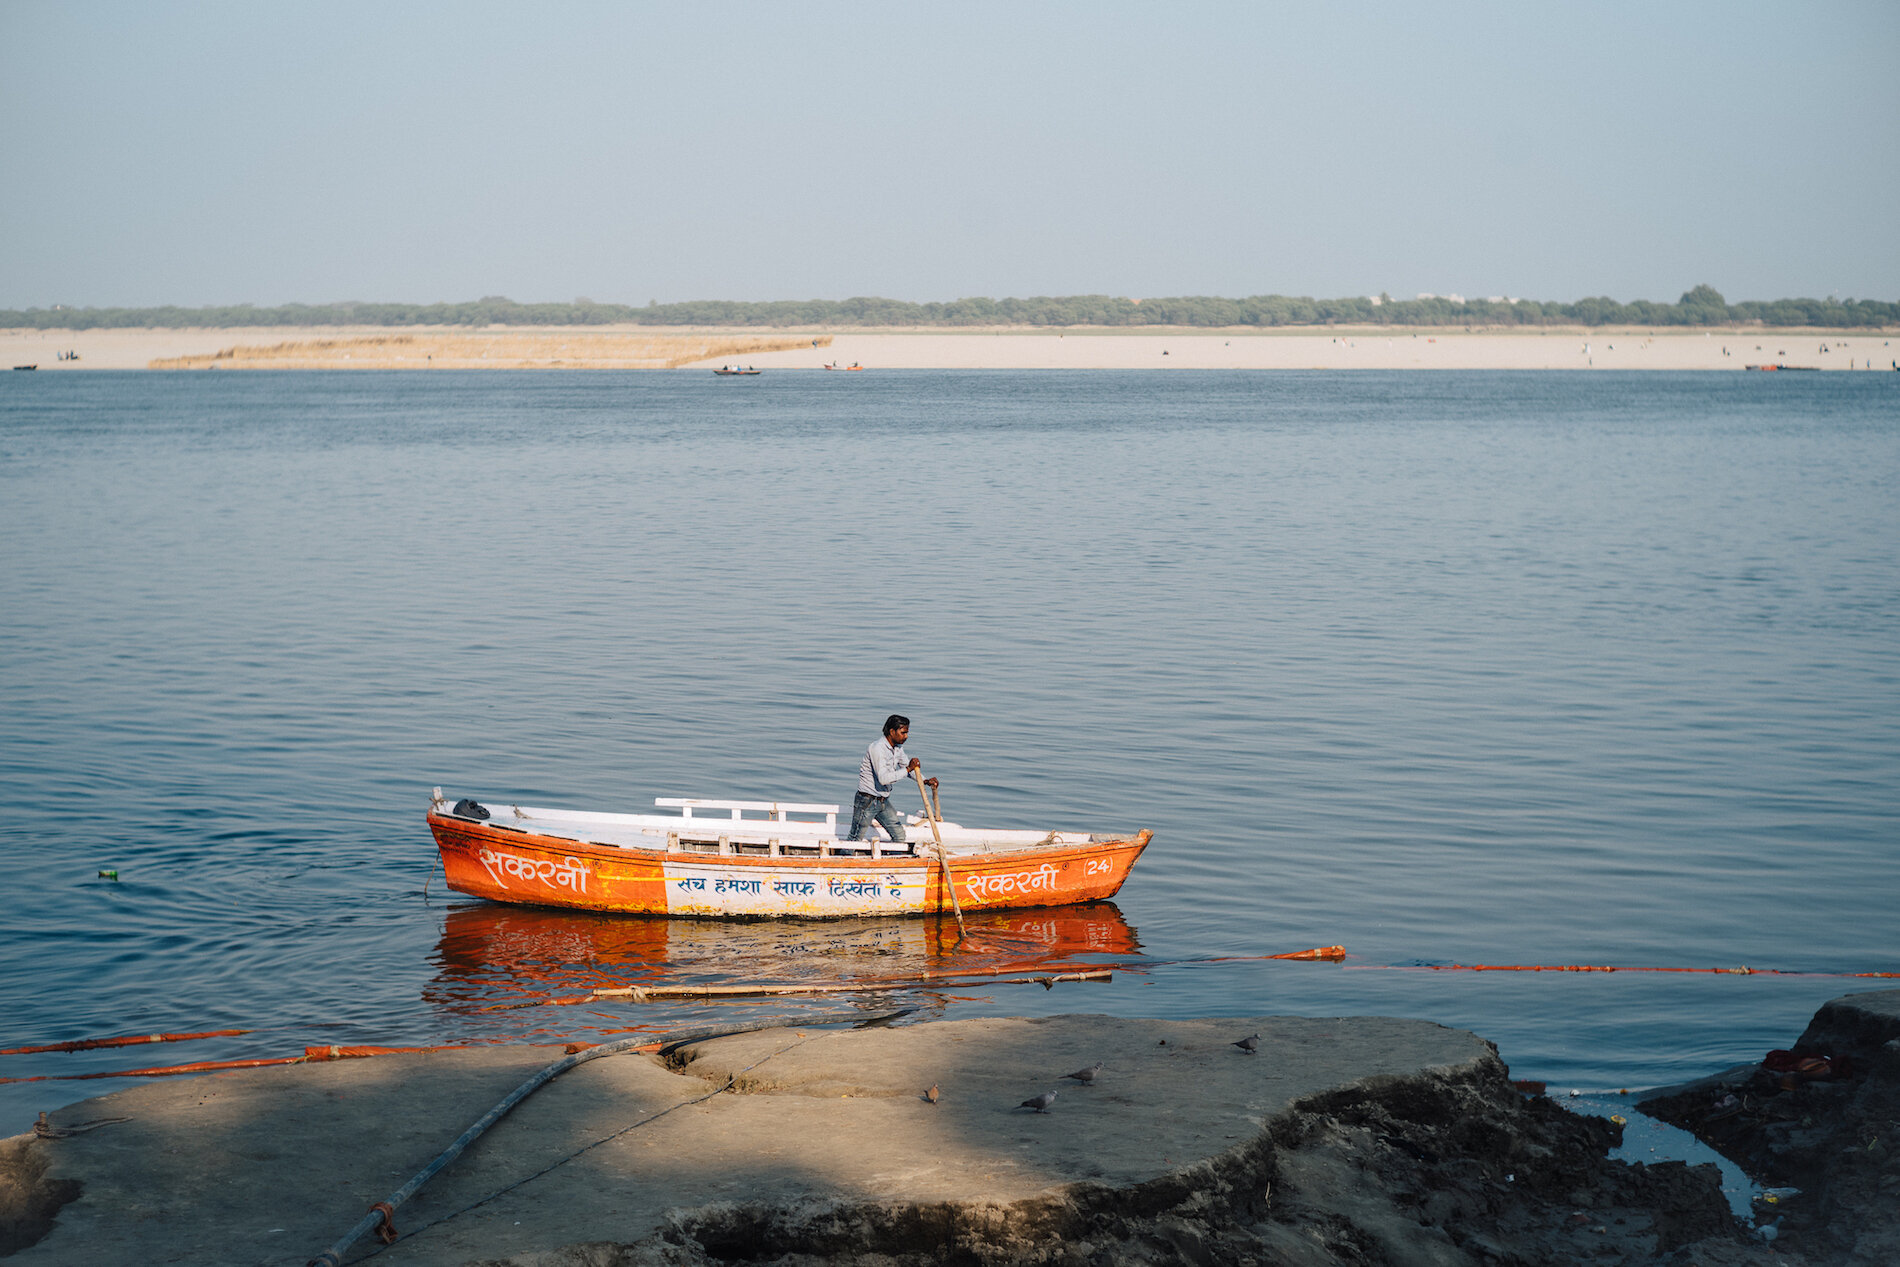  Rowing down the Ganga 